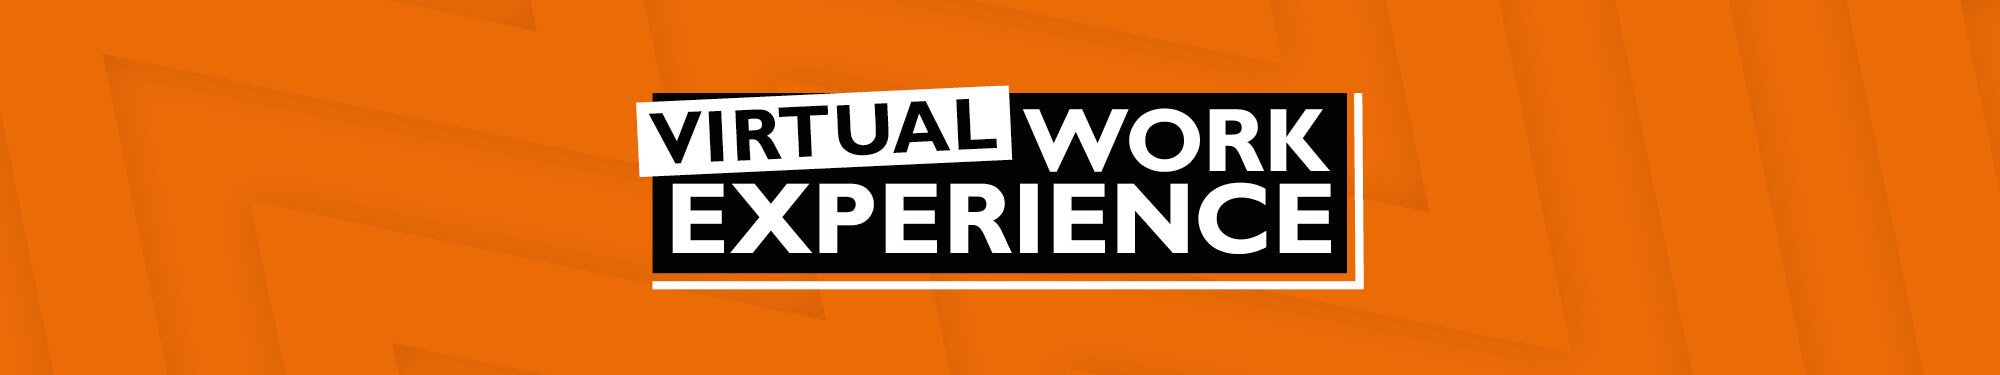 Virtual work experience